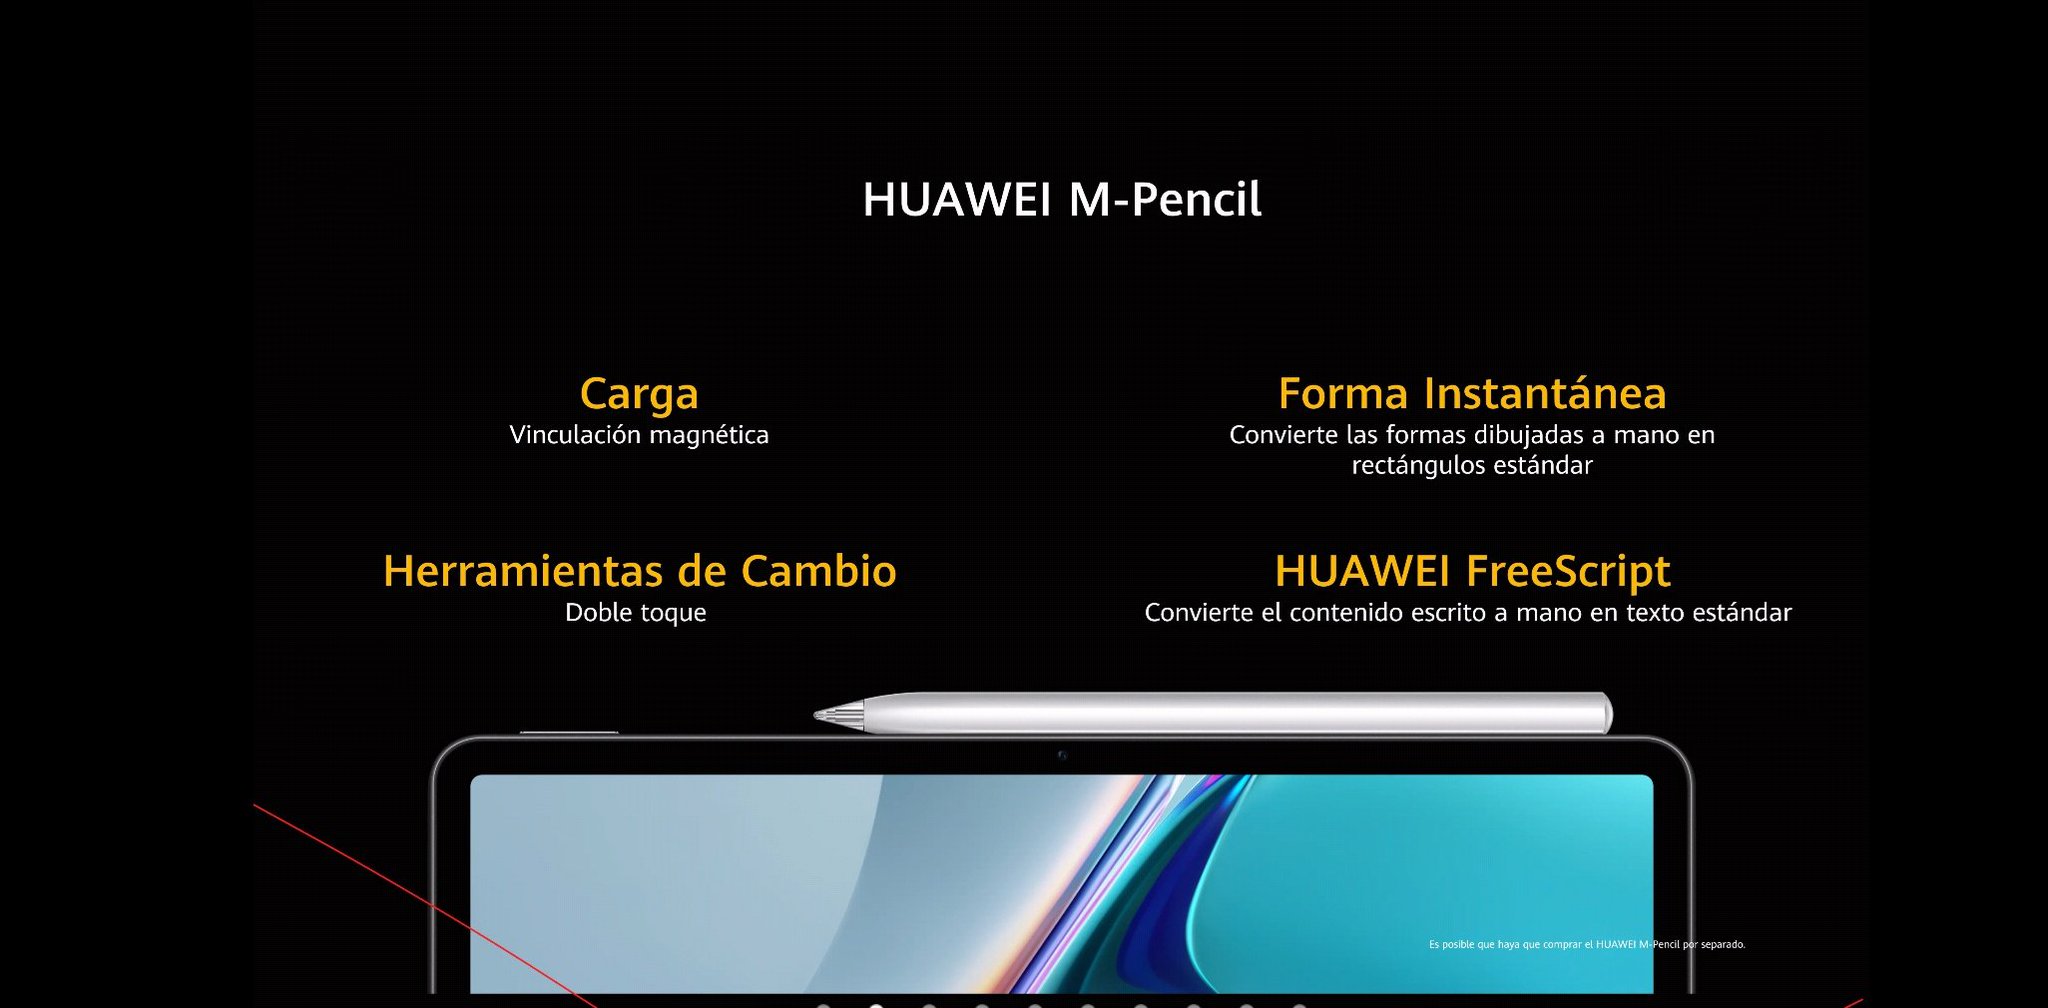 Huawei MatePad 11